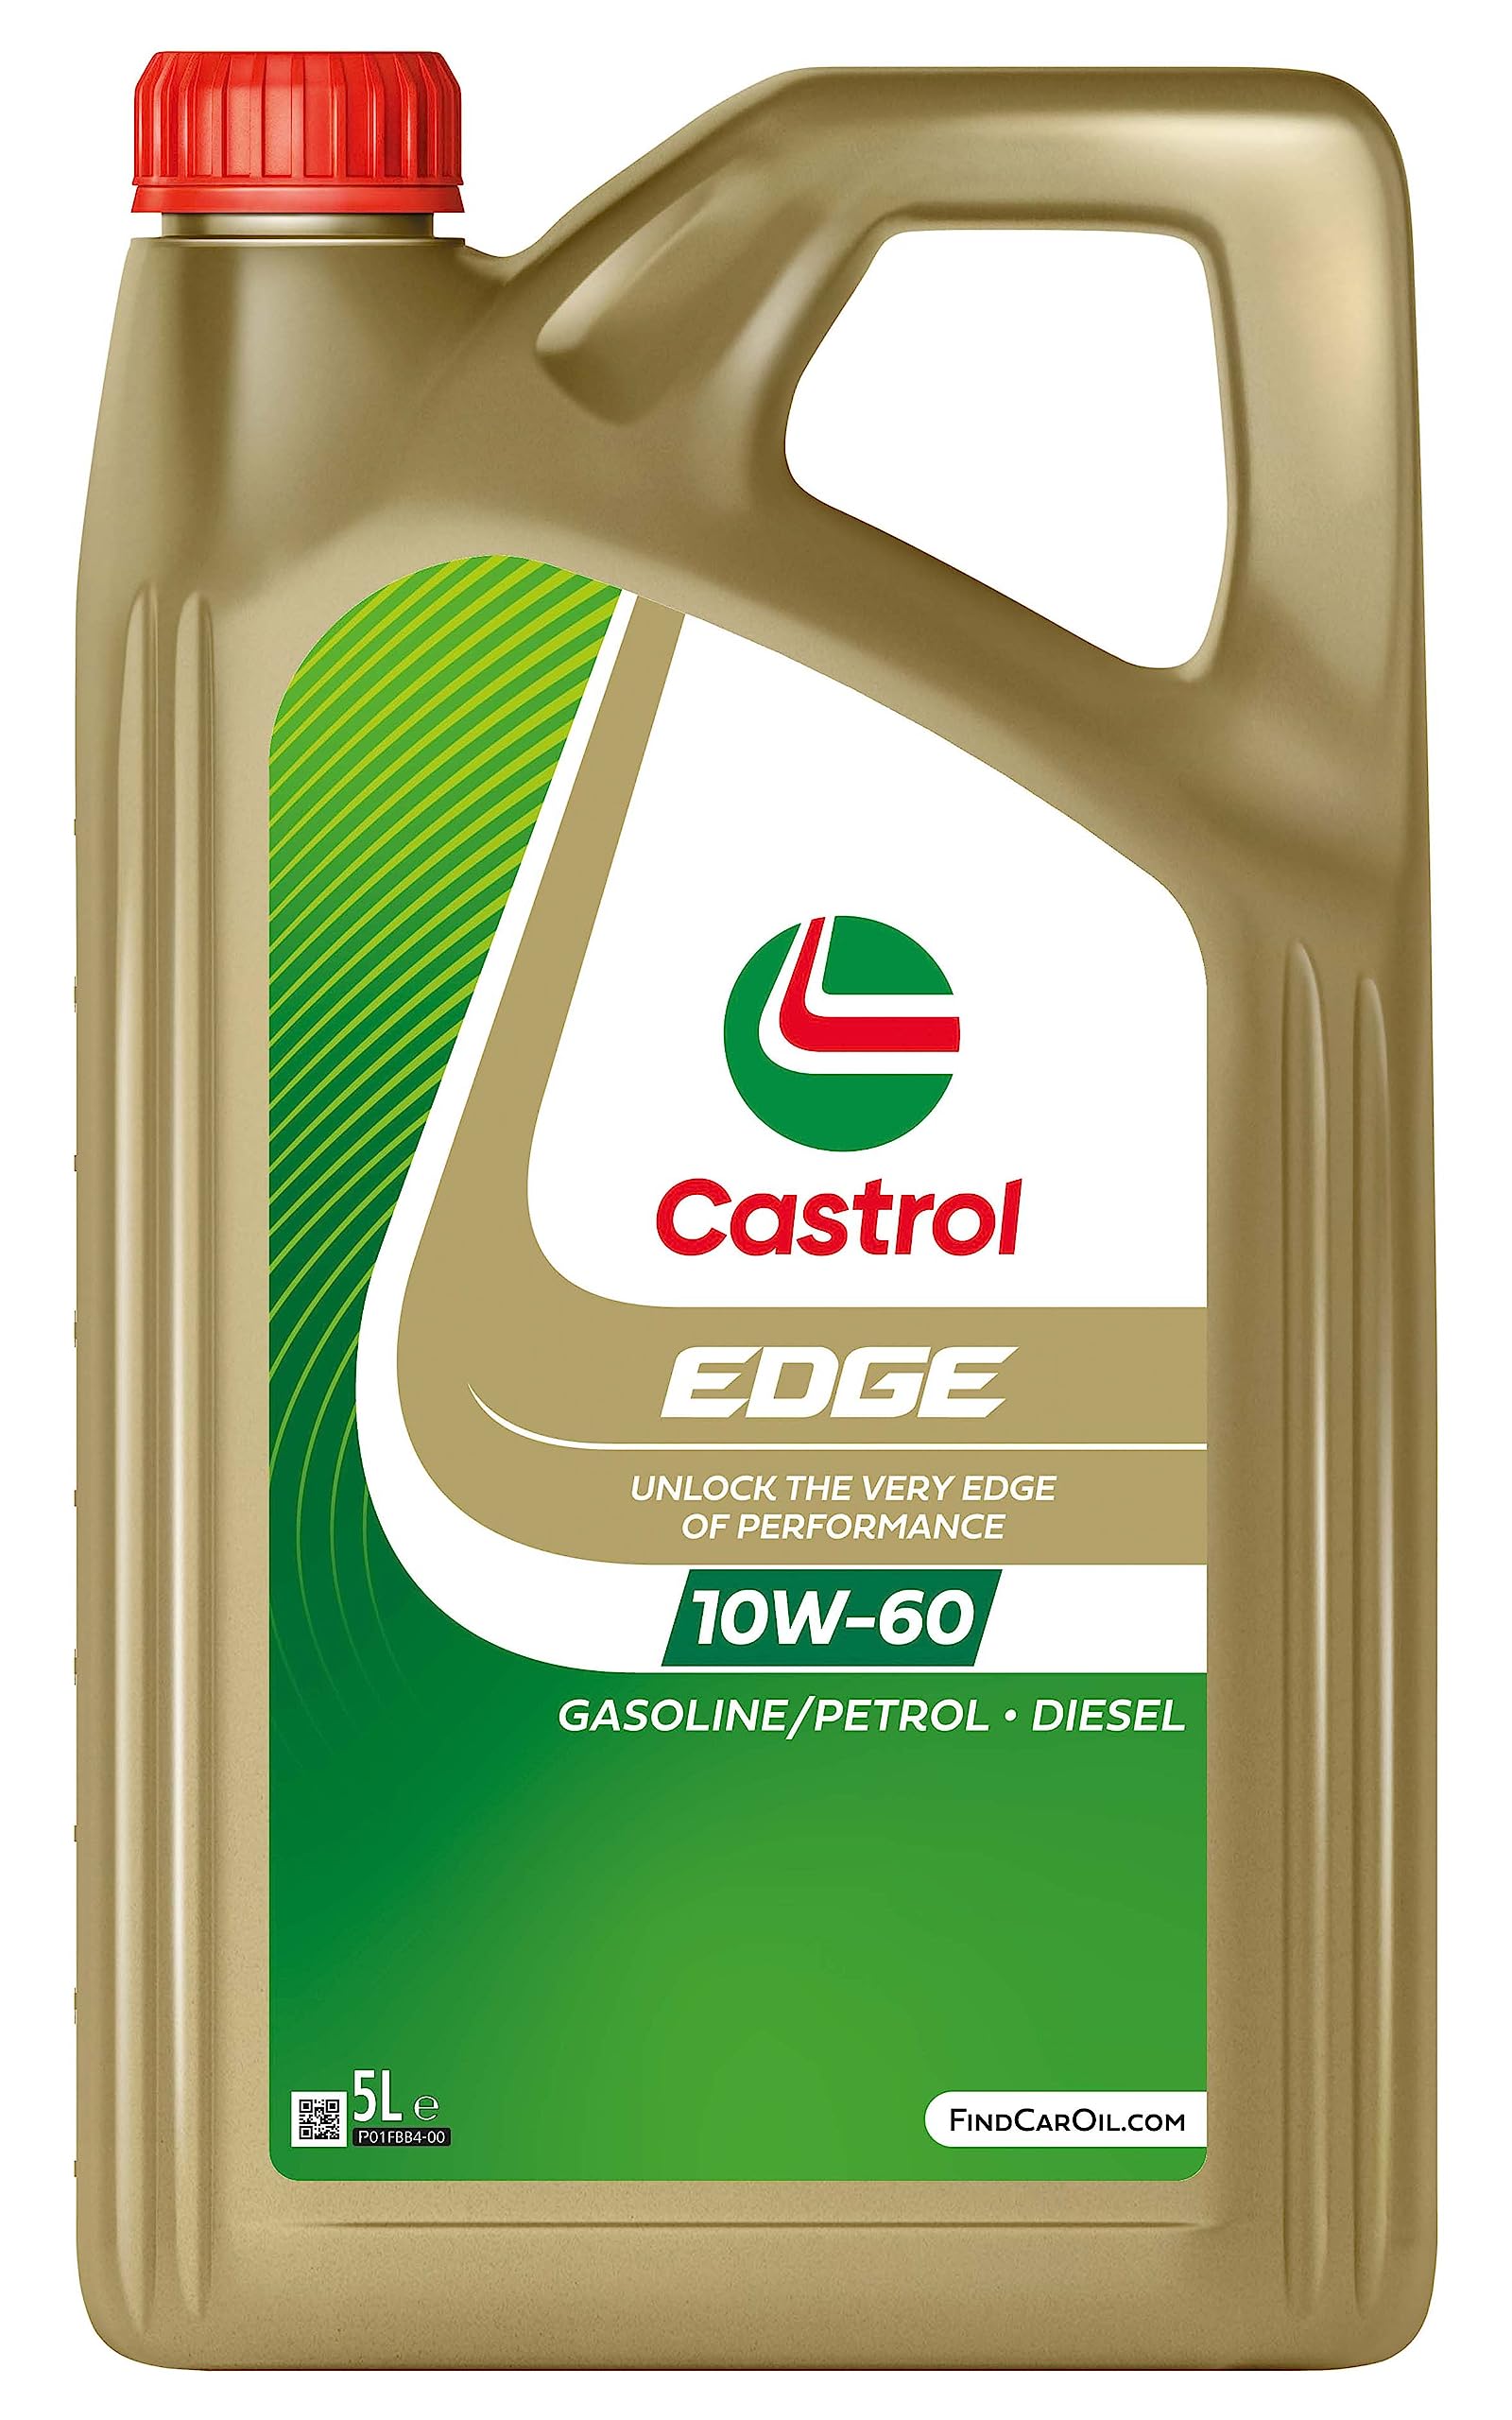 Castrol EDGE 10W-60 Motoröl, 5L von Castrol